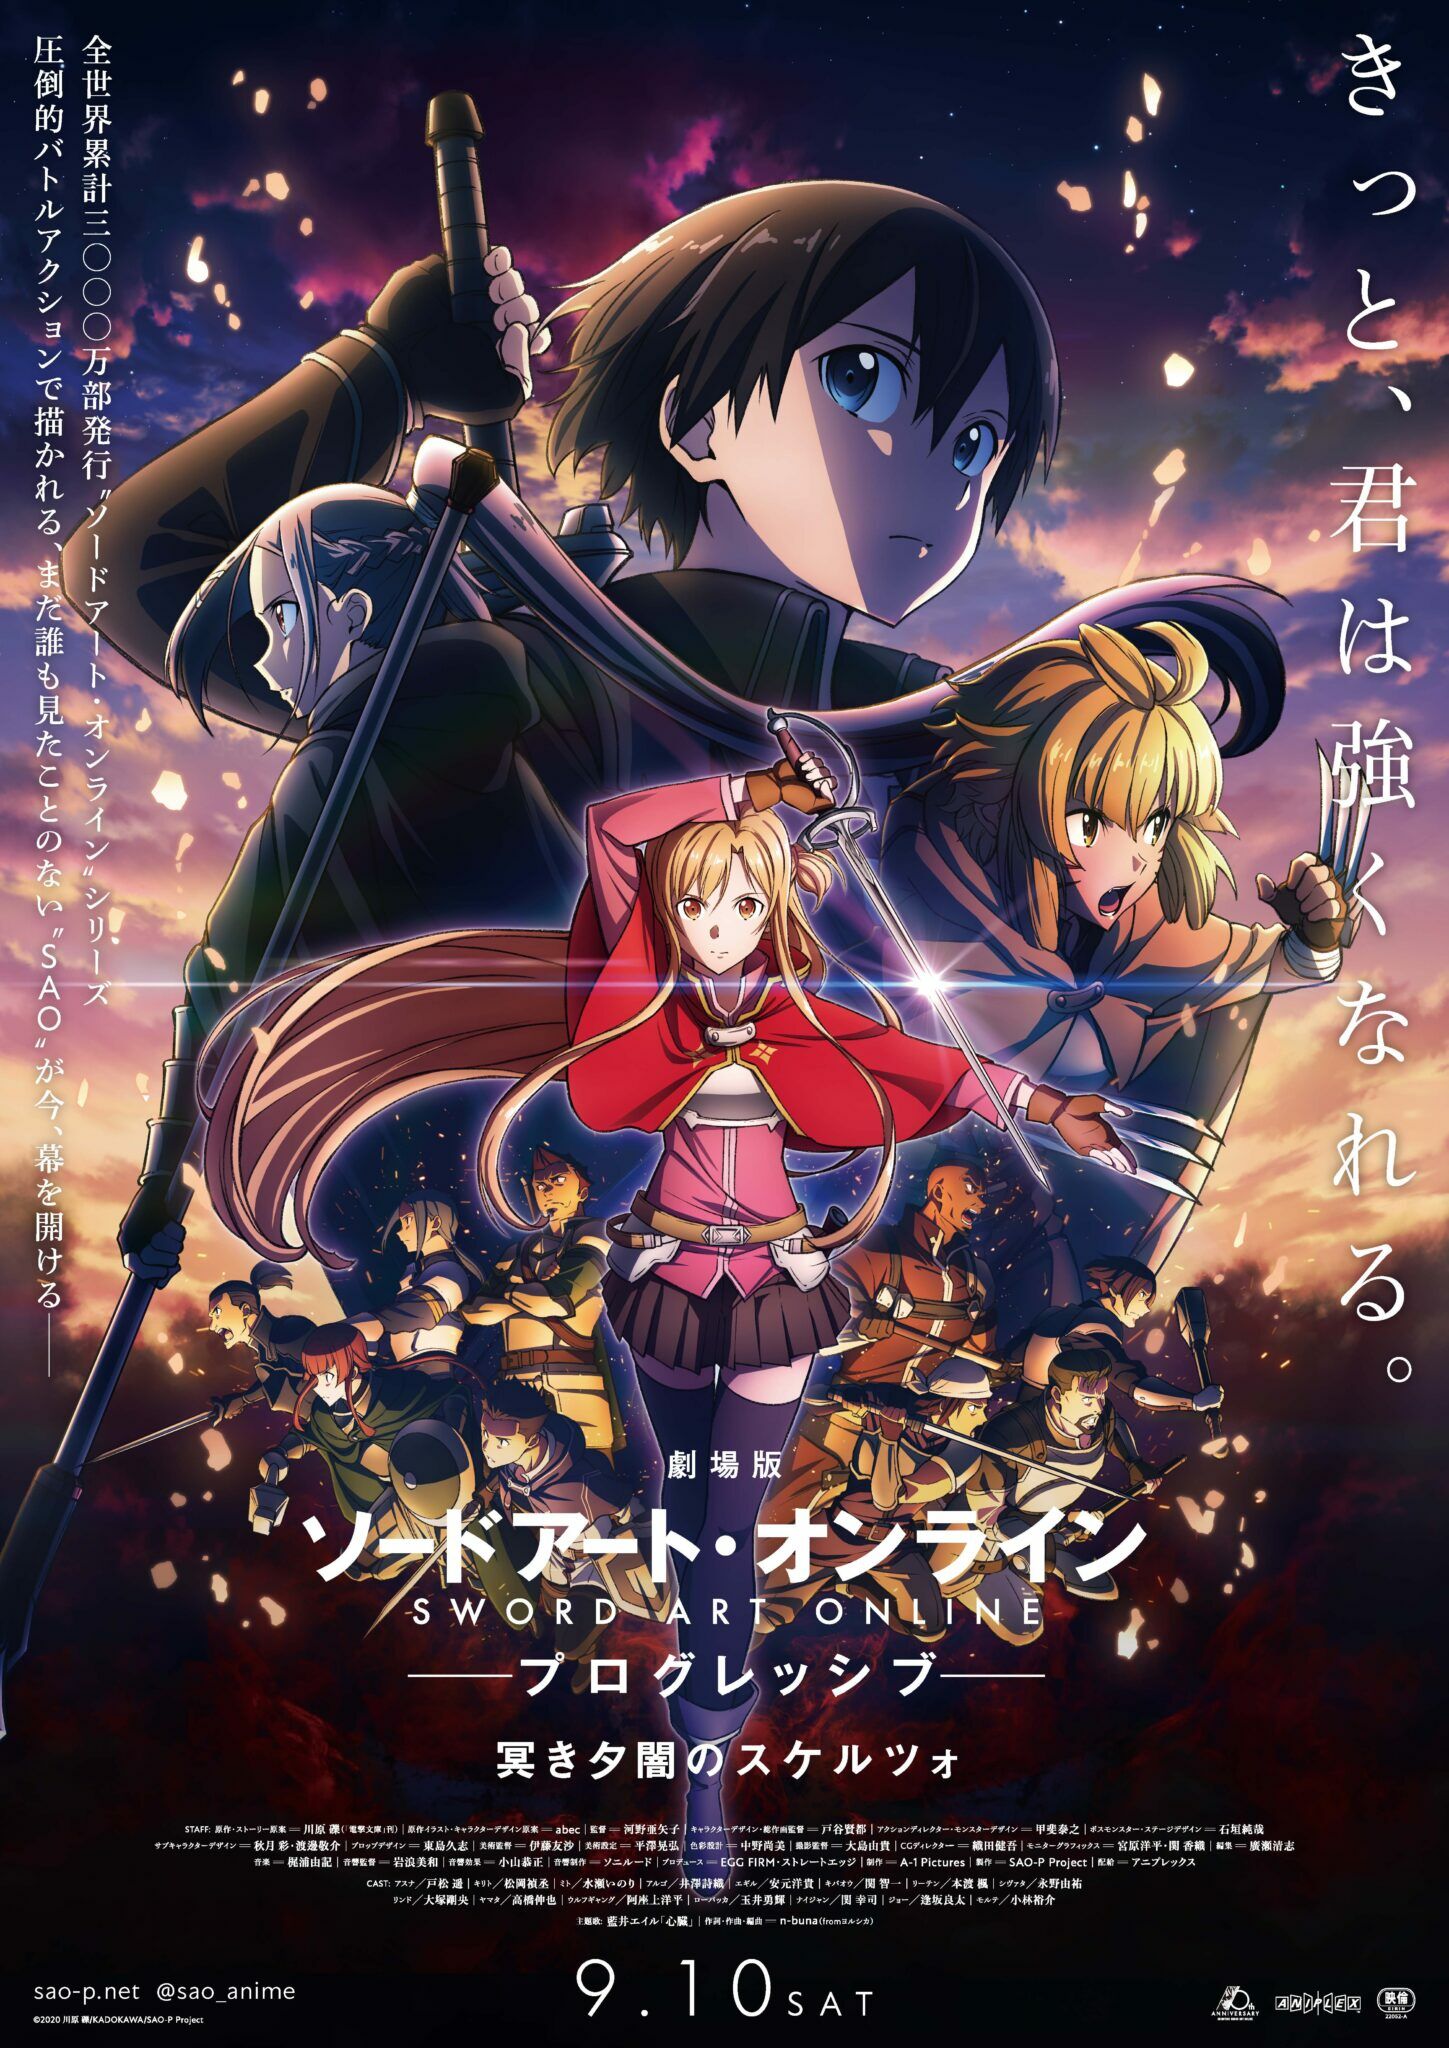 Fantastična manga ekranizacija: Sword Art Online Progressive "Scherzo of twilight” samo za posetioce Games.con-a